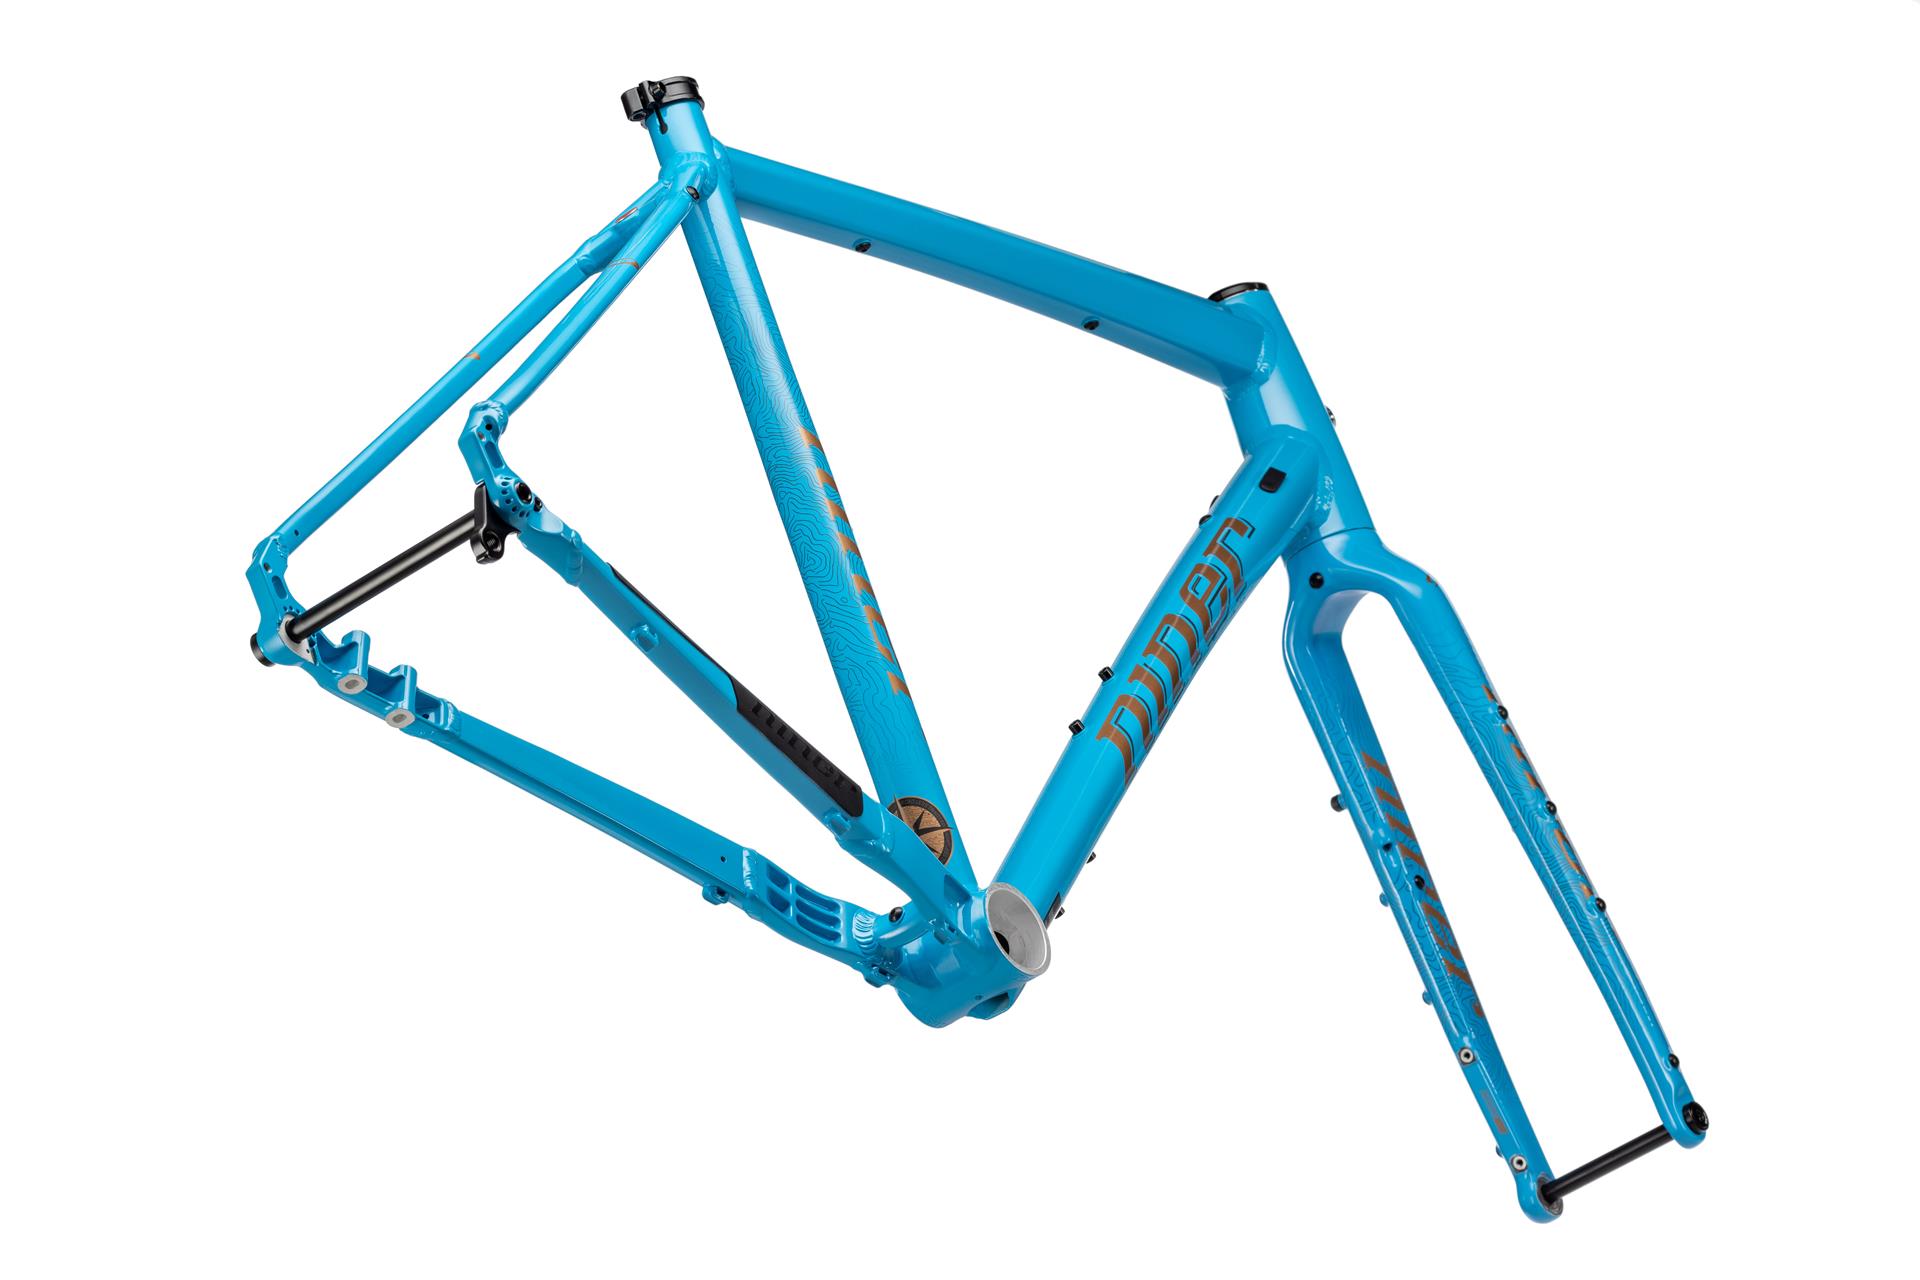 Niner RLT 4-star велосипед, серый/голубой, 56